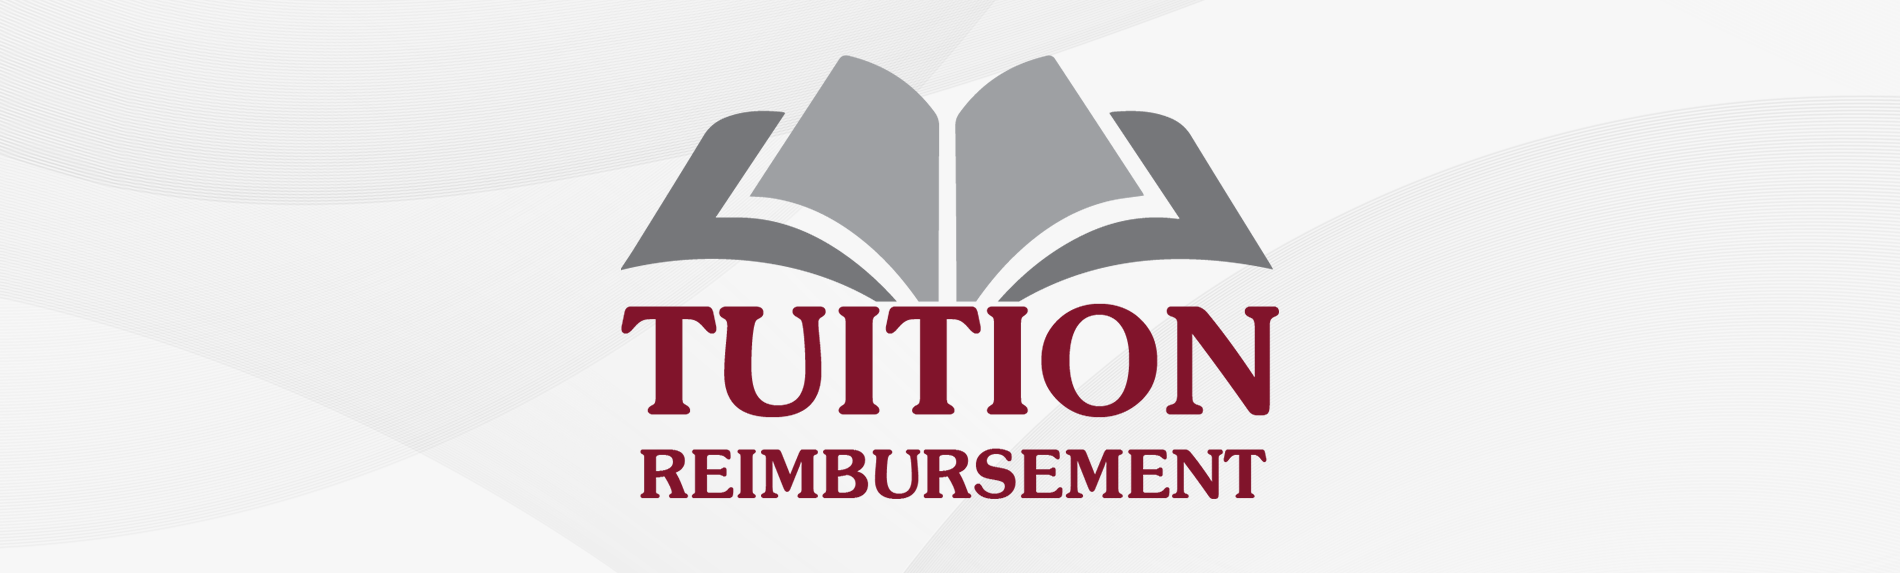 tuition reimbursement logo with books